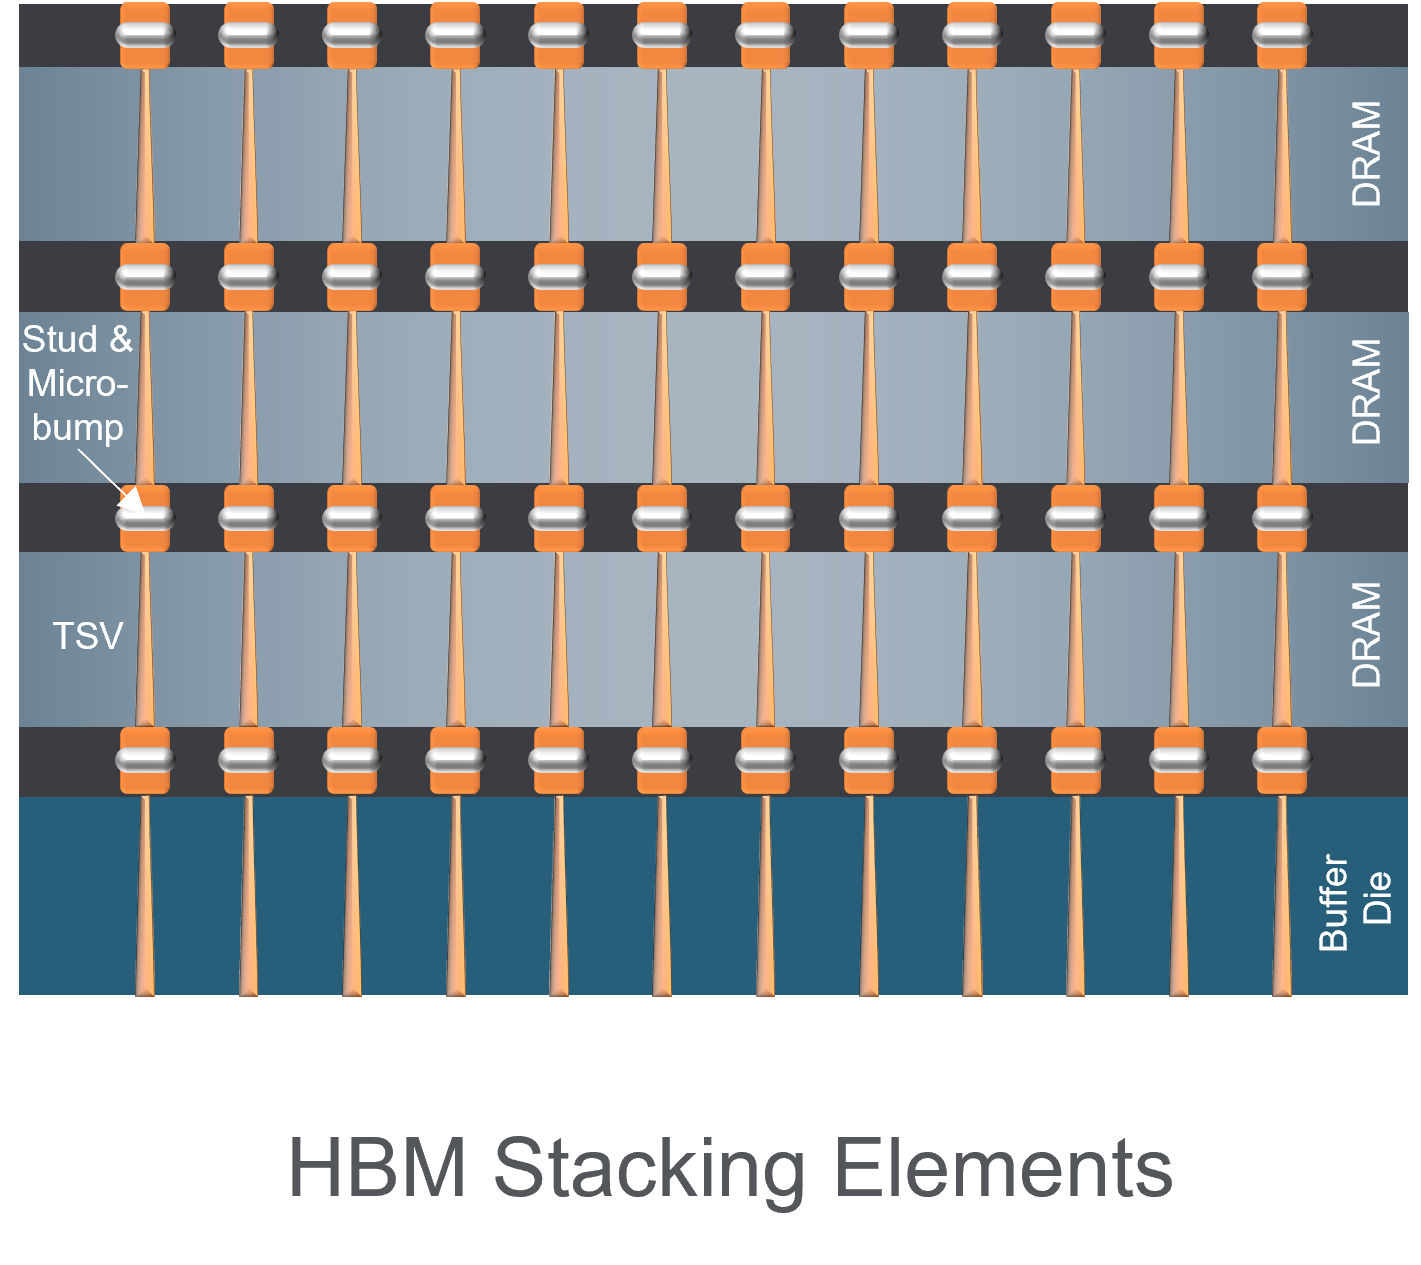 HBM Stacking Elements